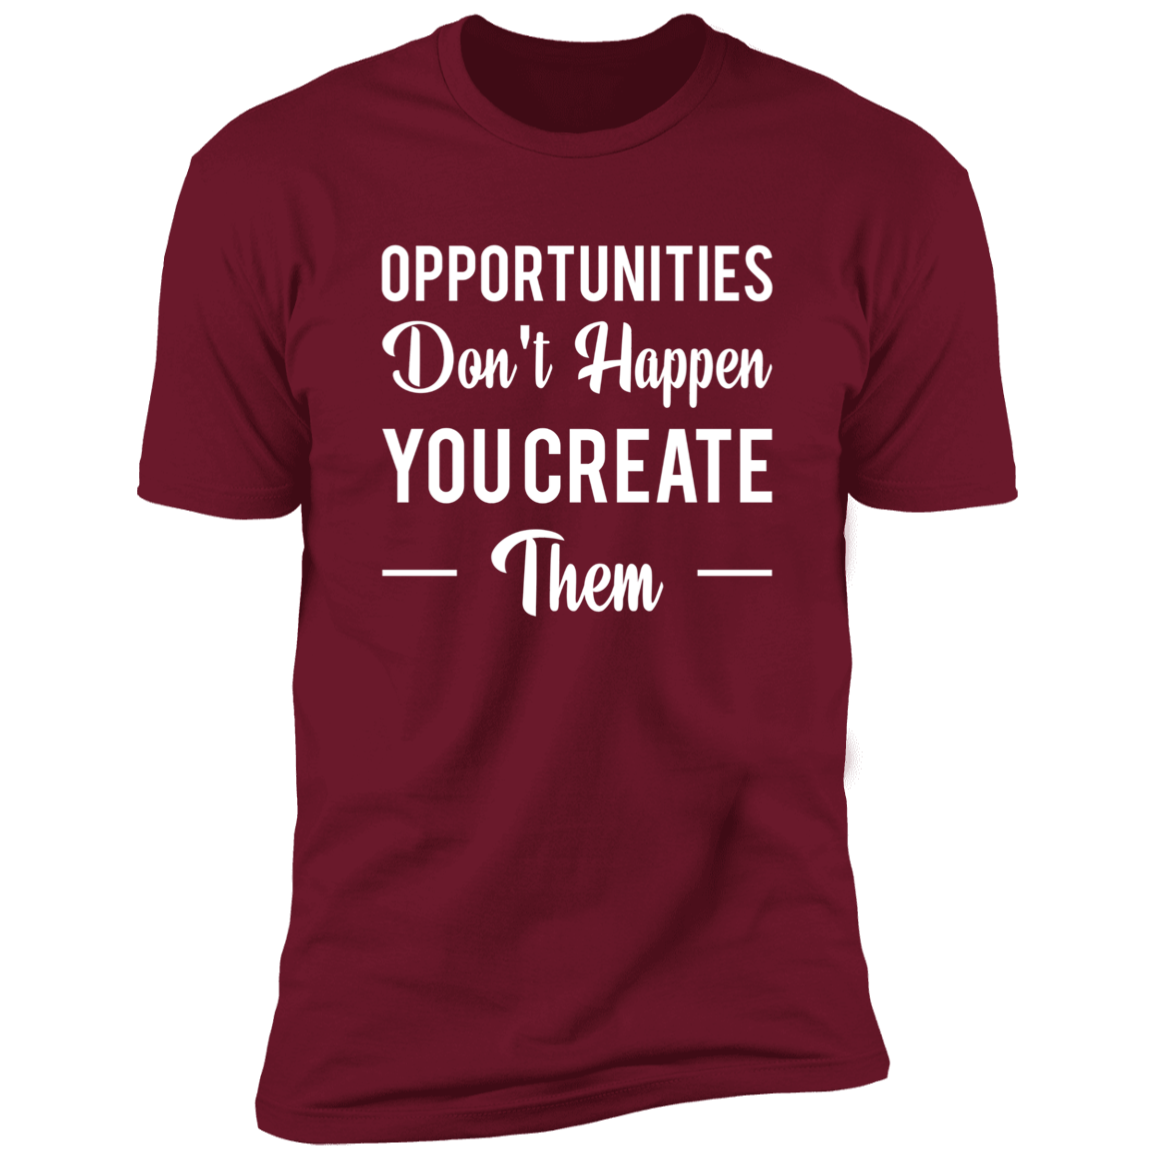 Create Your Own Opportunities - Z61x Premium Short Sleeve Unisex T-Shirt